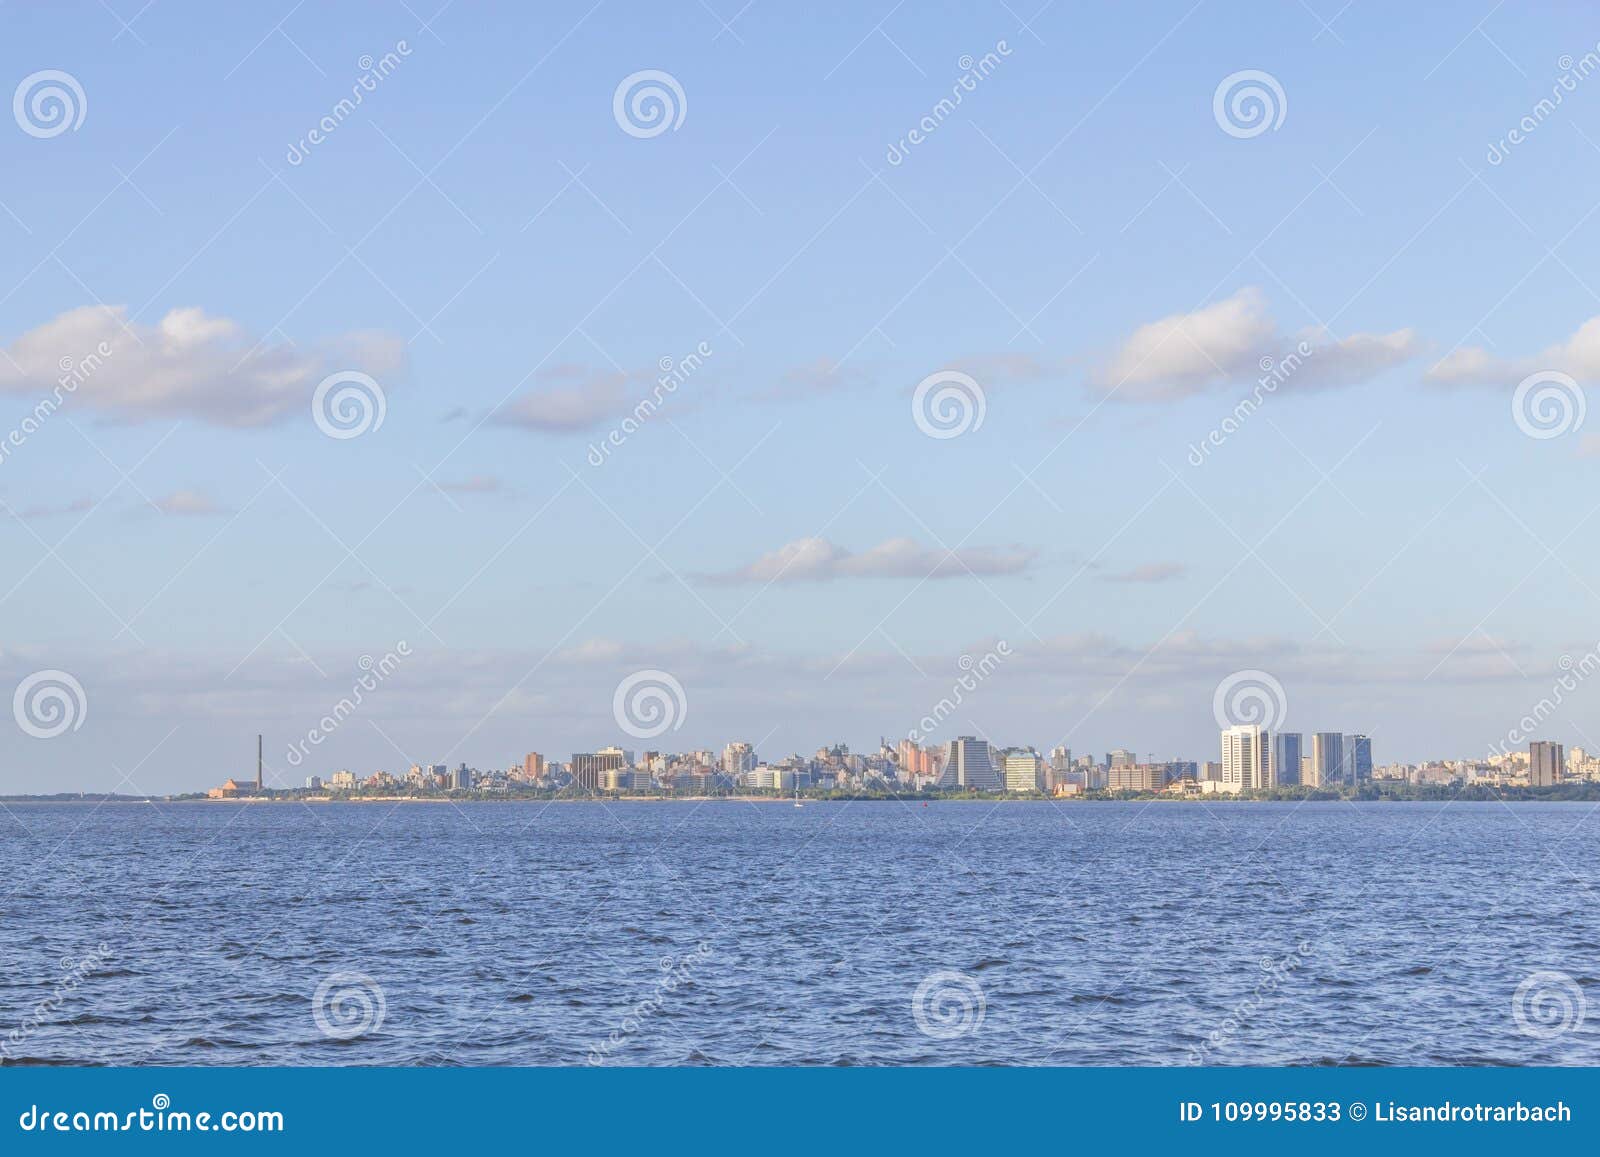 cityview with gasometro and guaiba lake, porto alegre